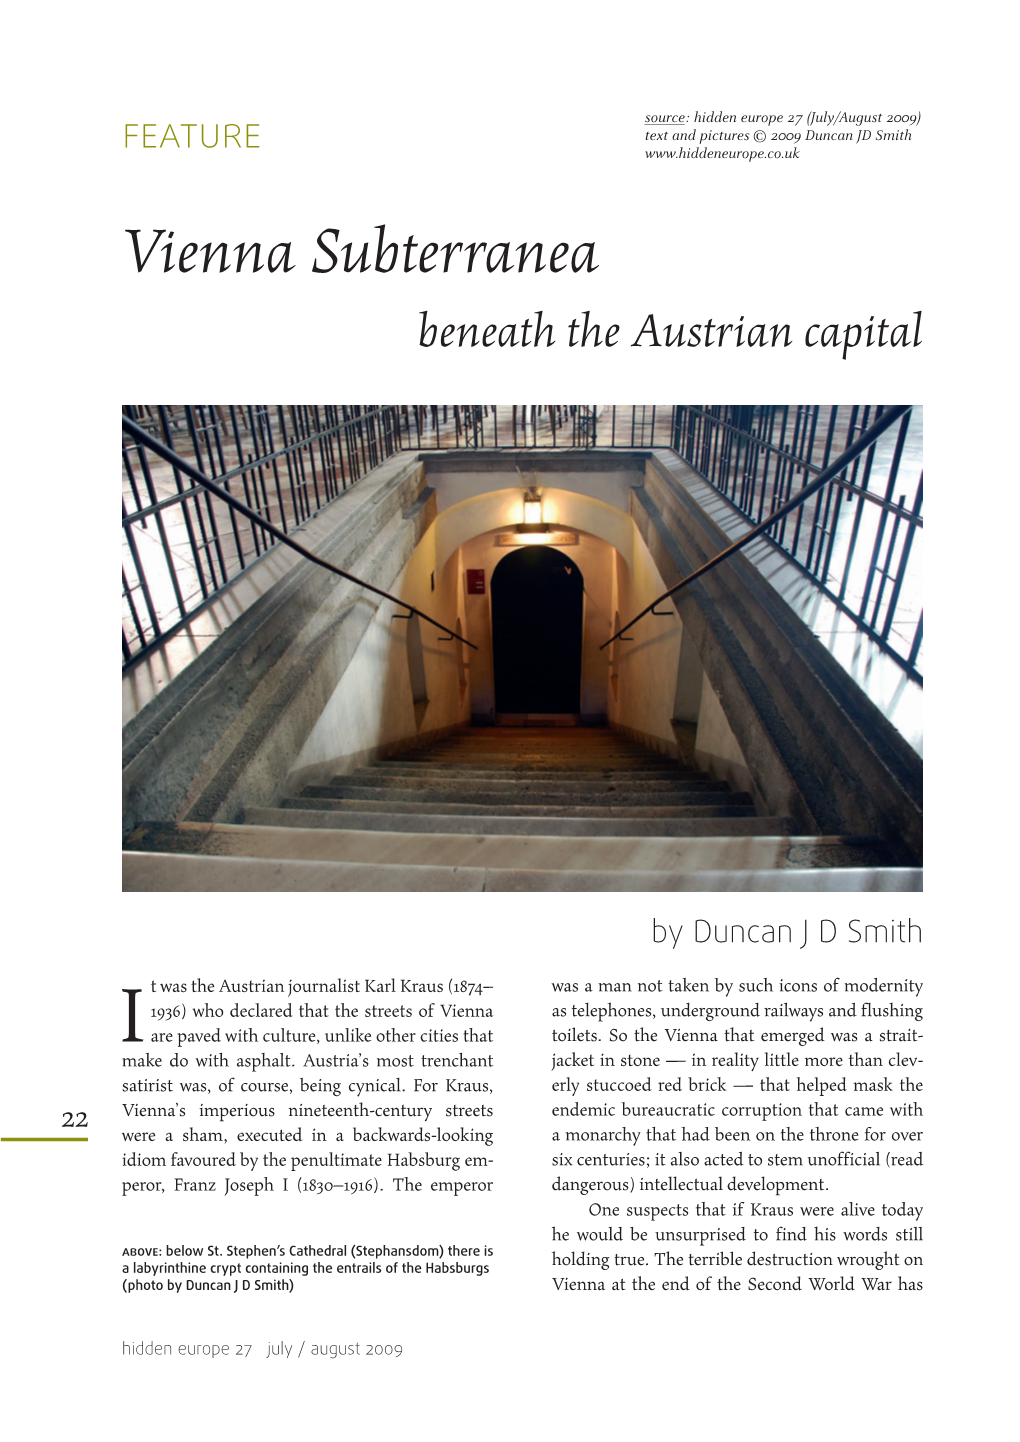 Vienna Subterranea: Beneath the Austrian Capital